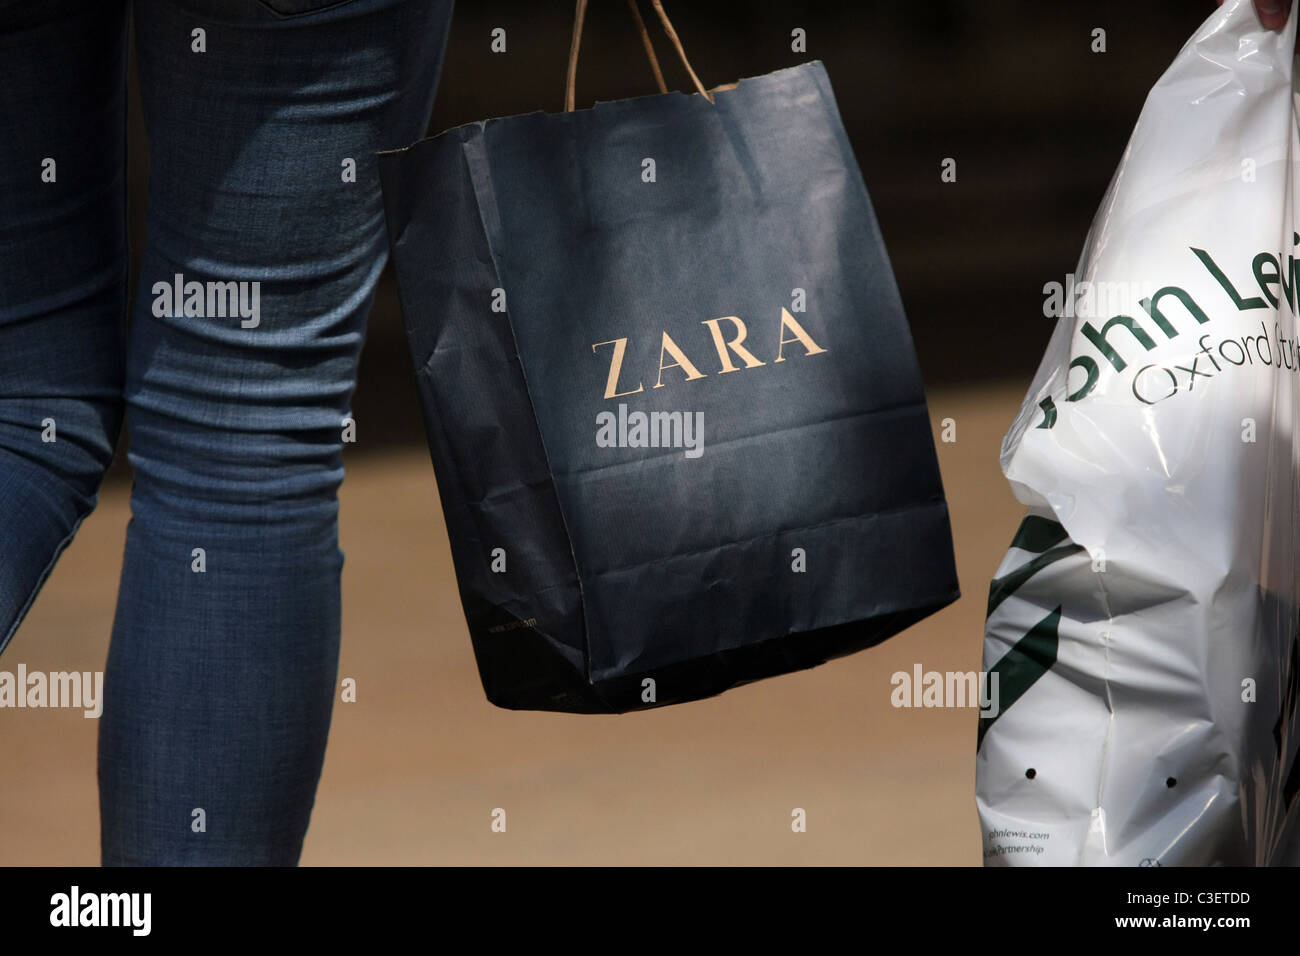 Original Zara paper shopping bag isolated on white – Stock Editorial Photo  © monticello #129593012